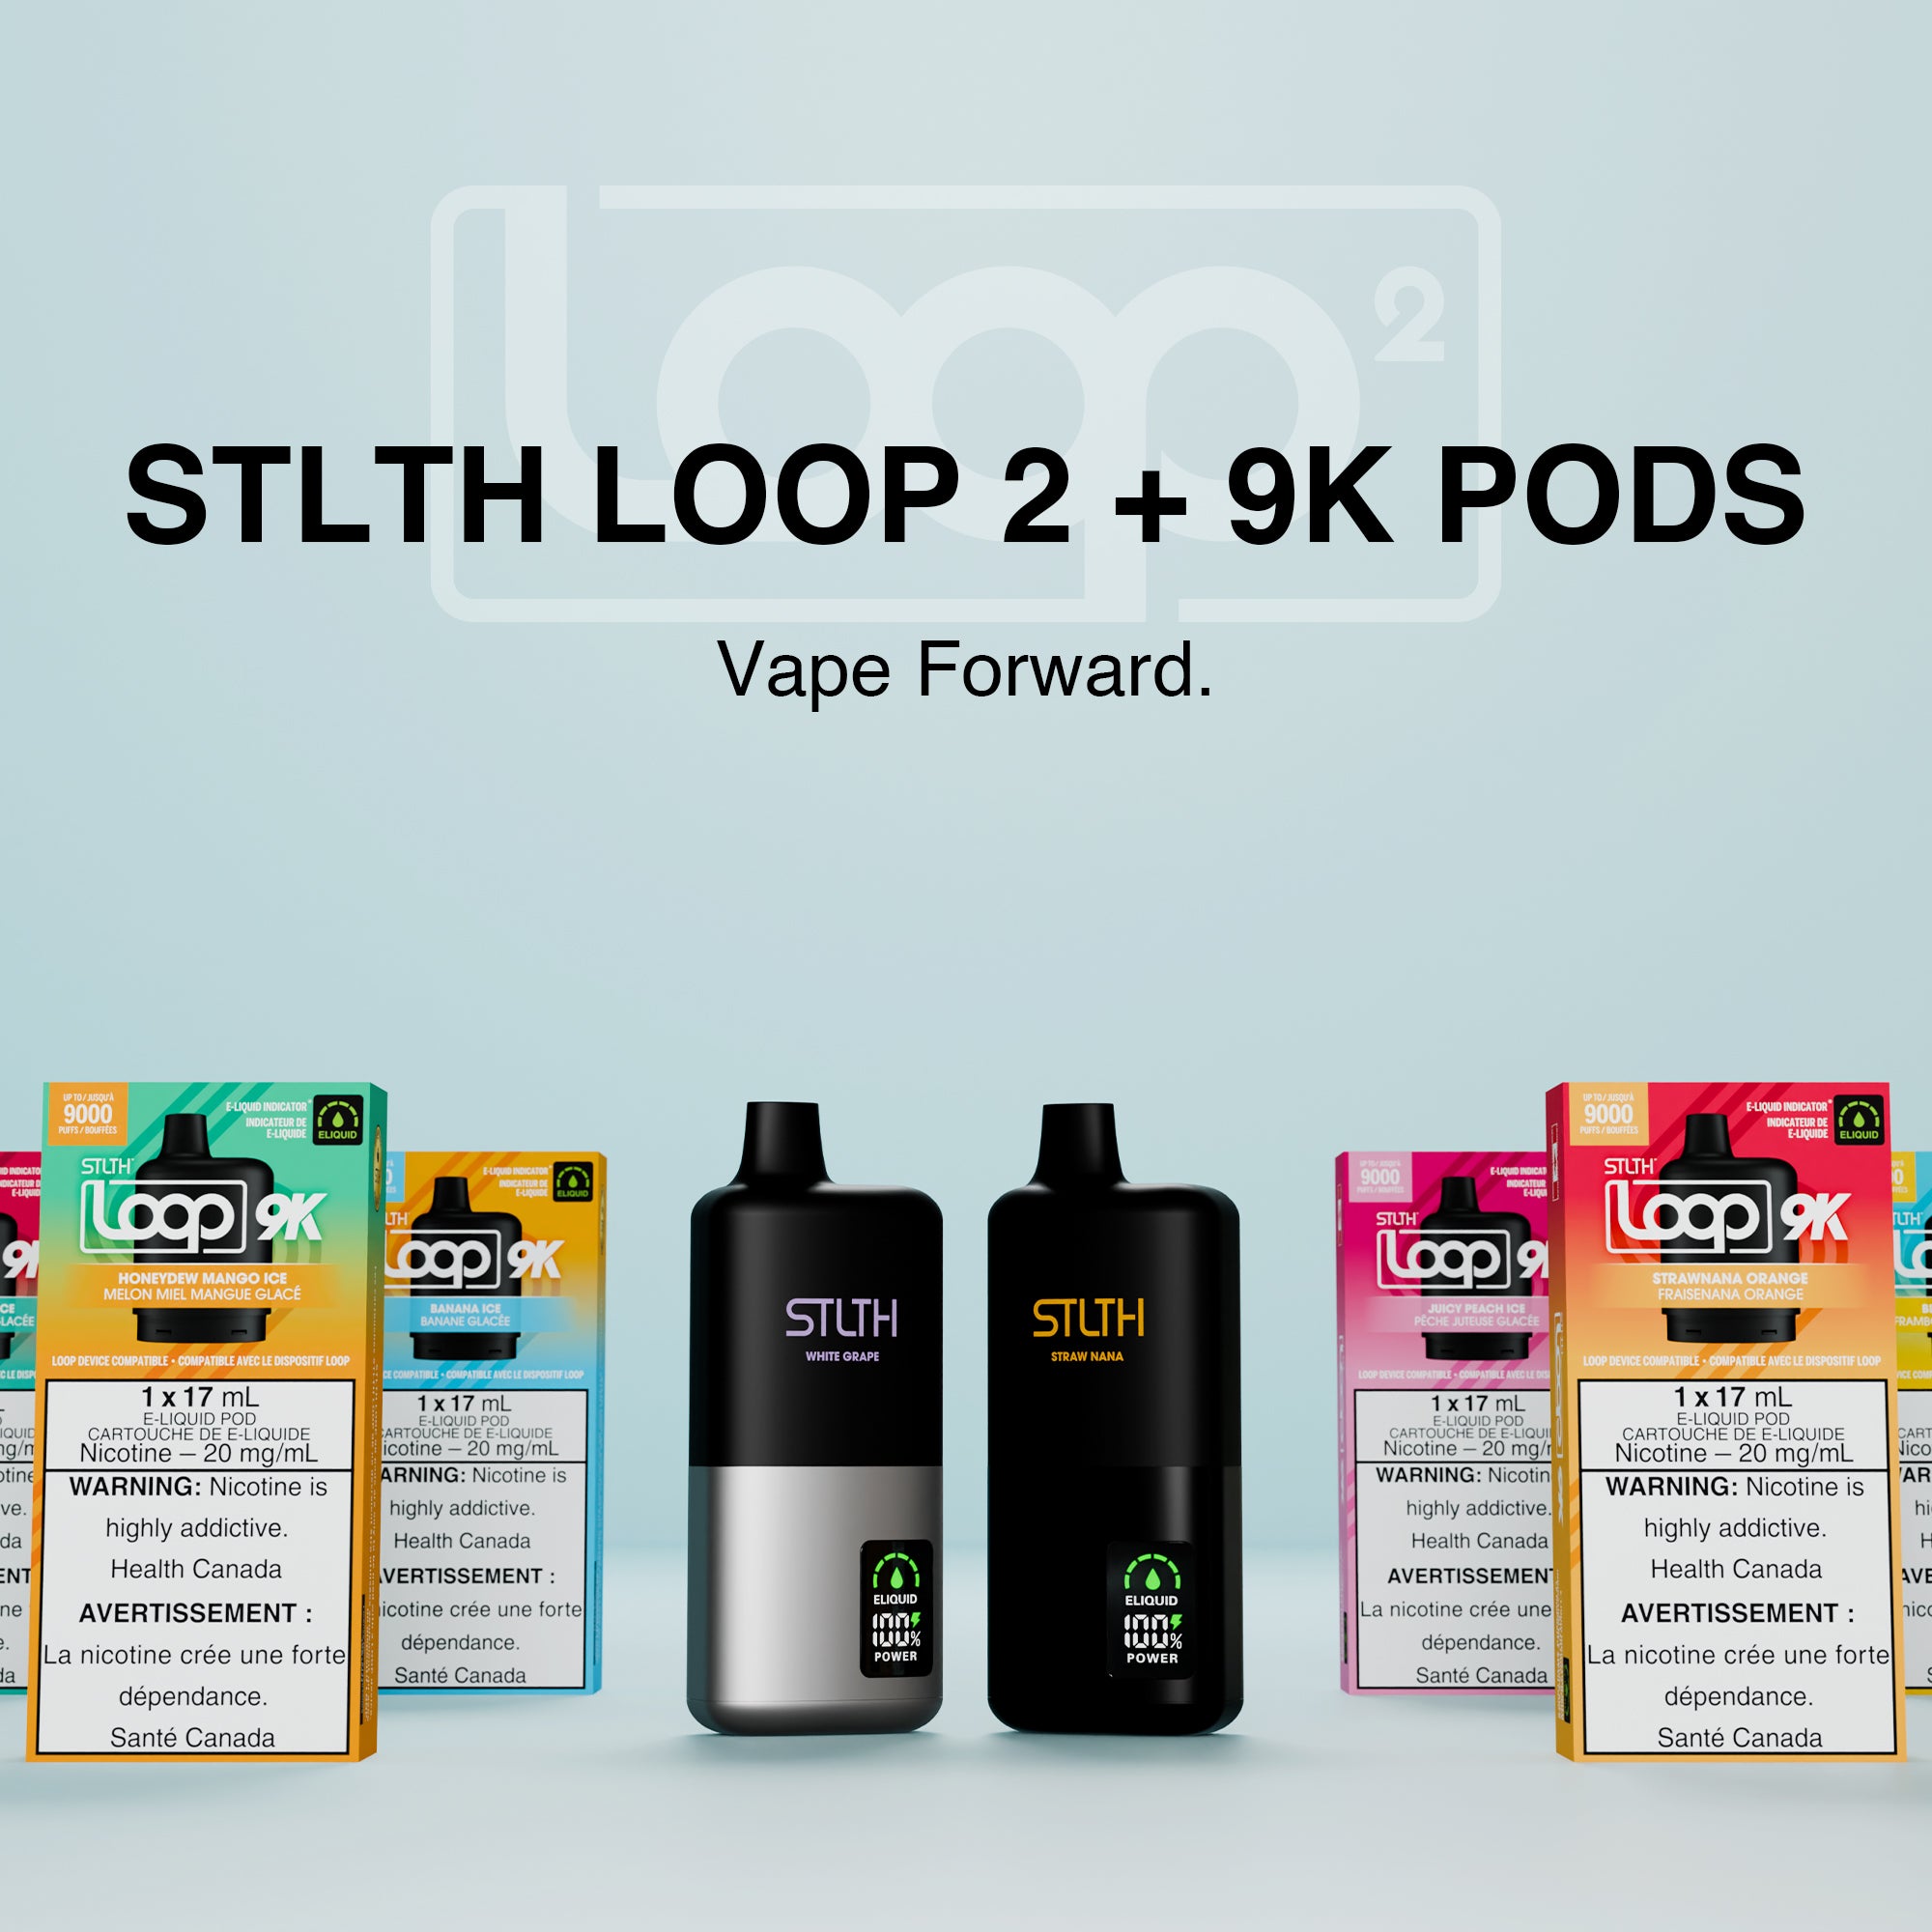 STLTH LOOP 2 + 9K PODS: Vape Forward